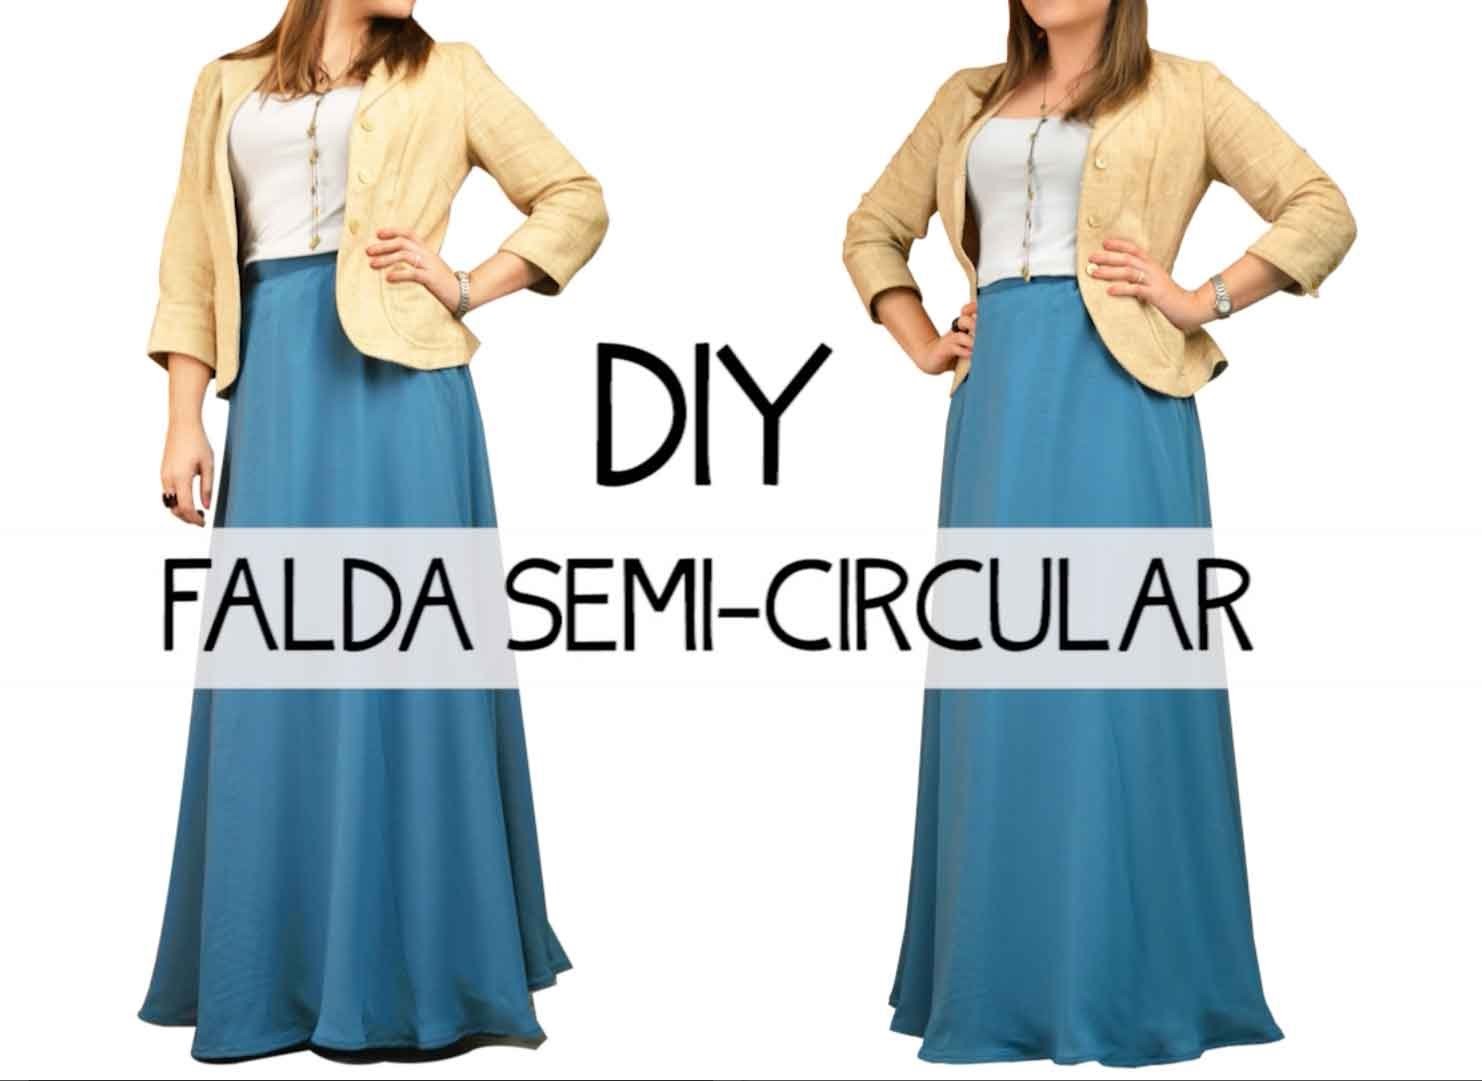 Falda semi-circular DIY